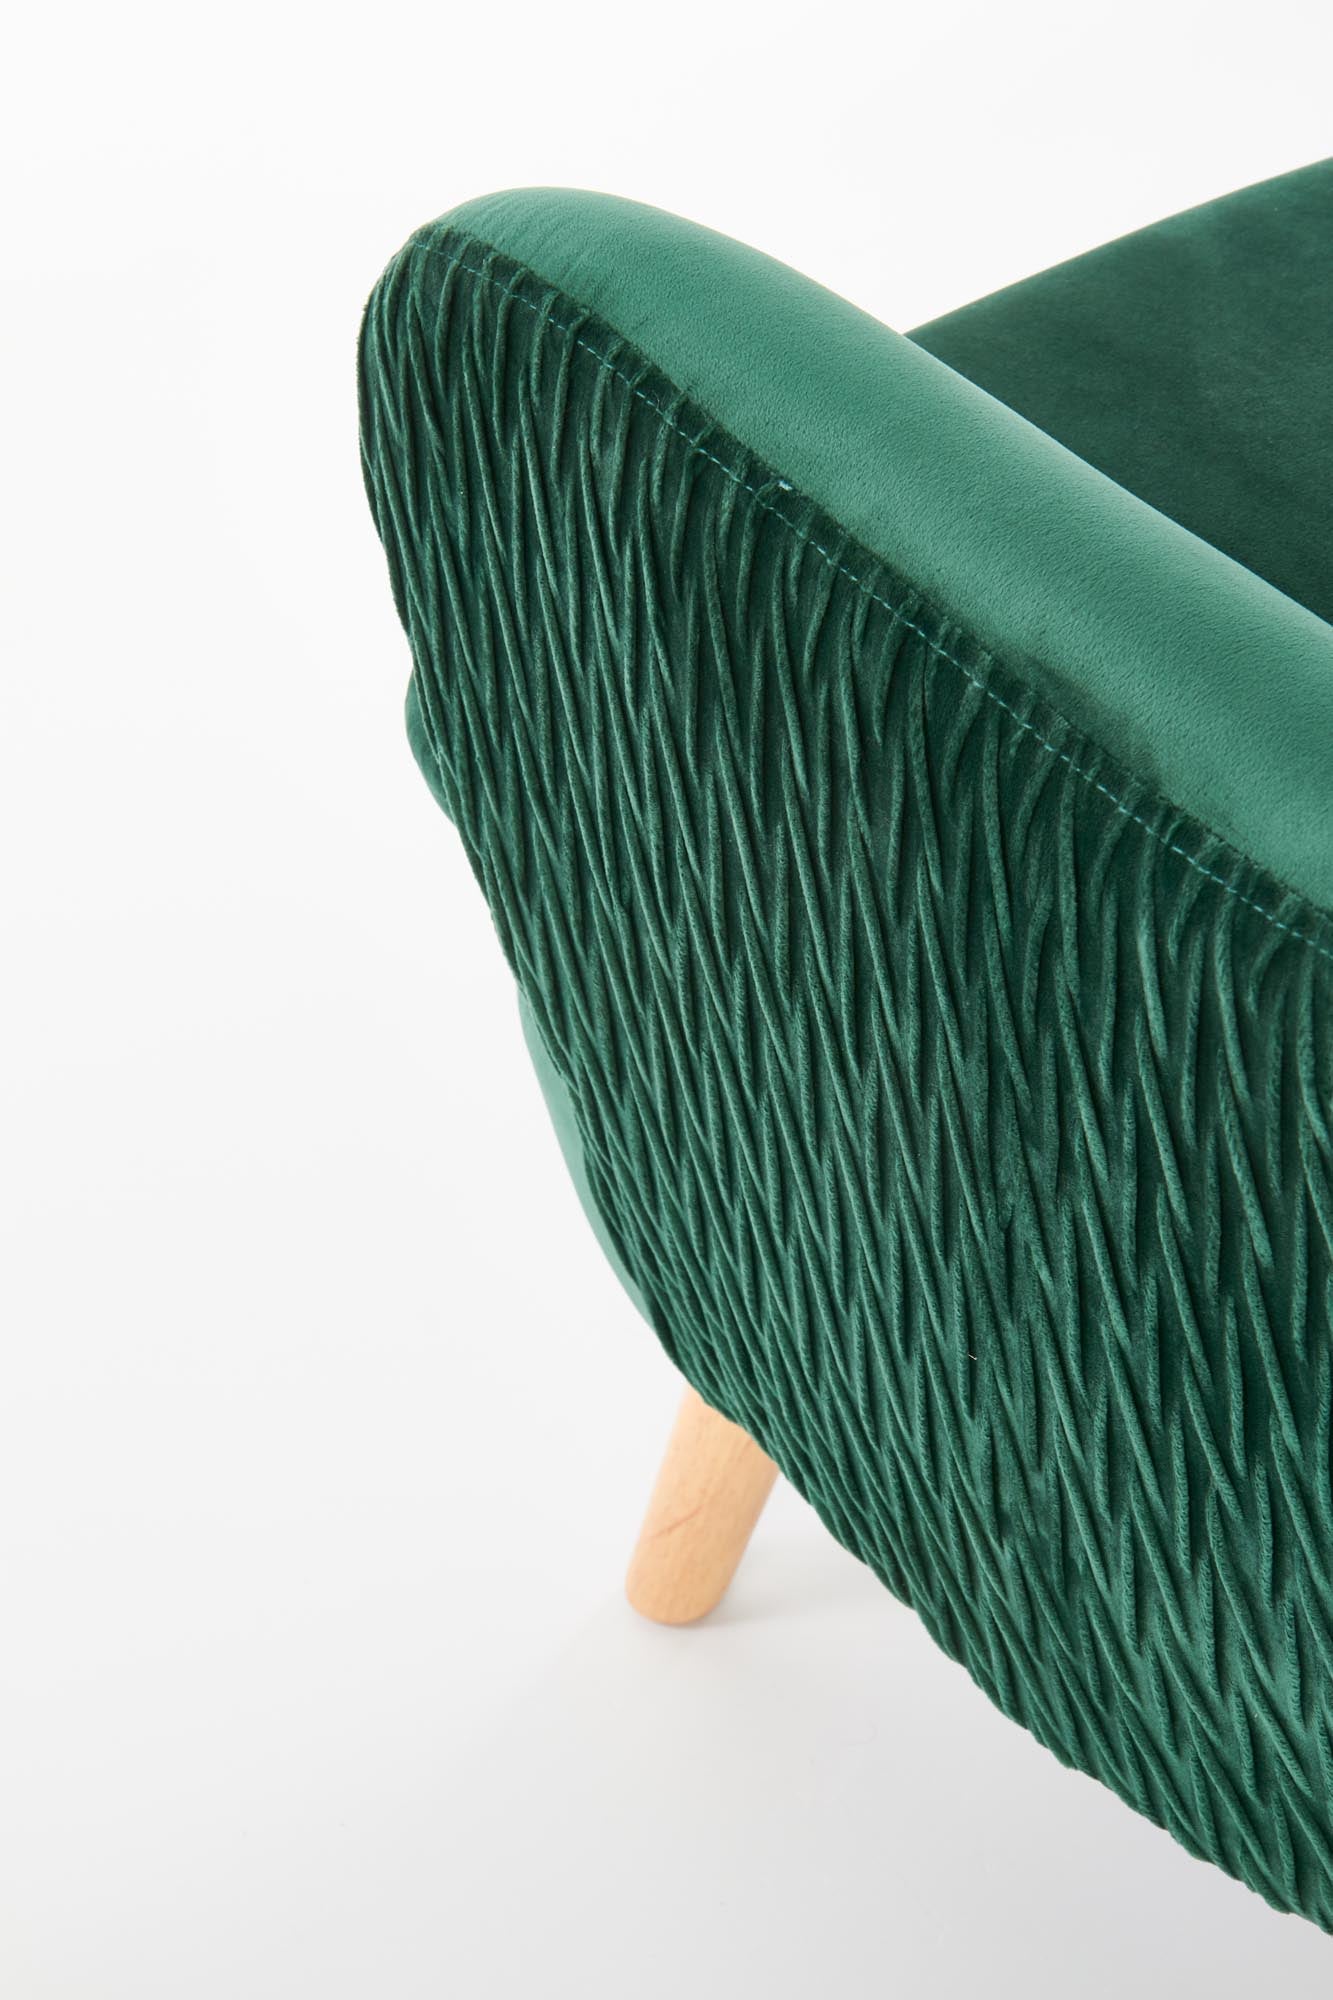 Nozomi fotel (zöld)